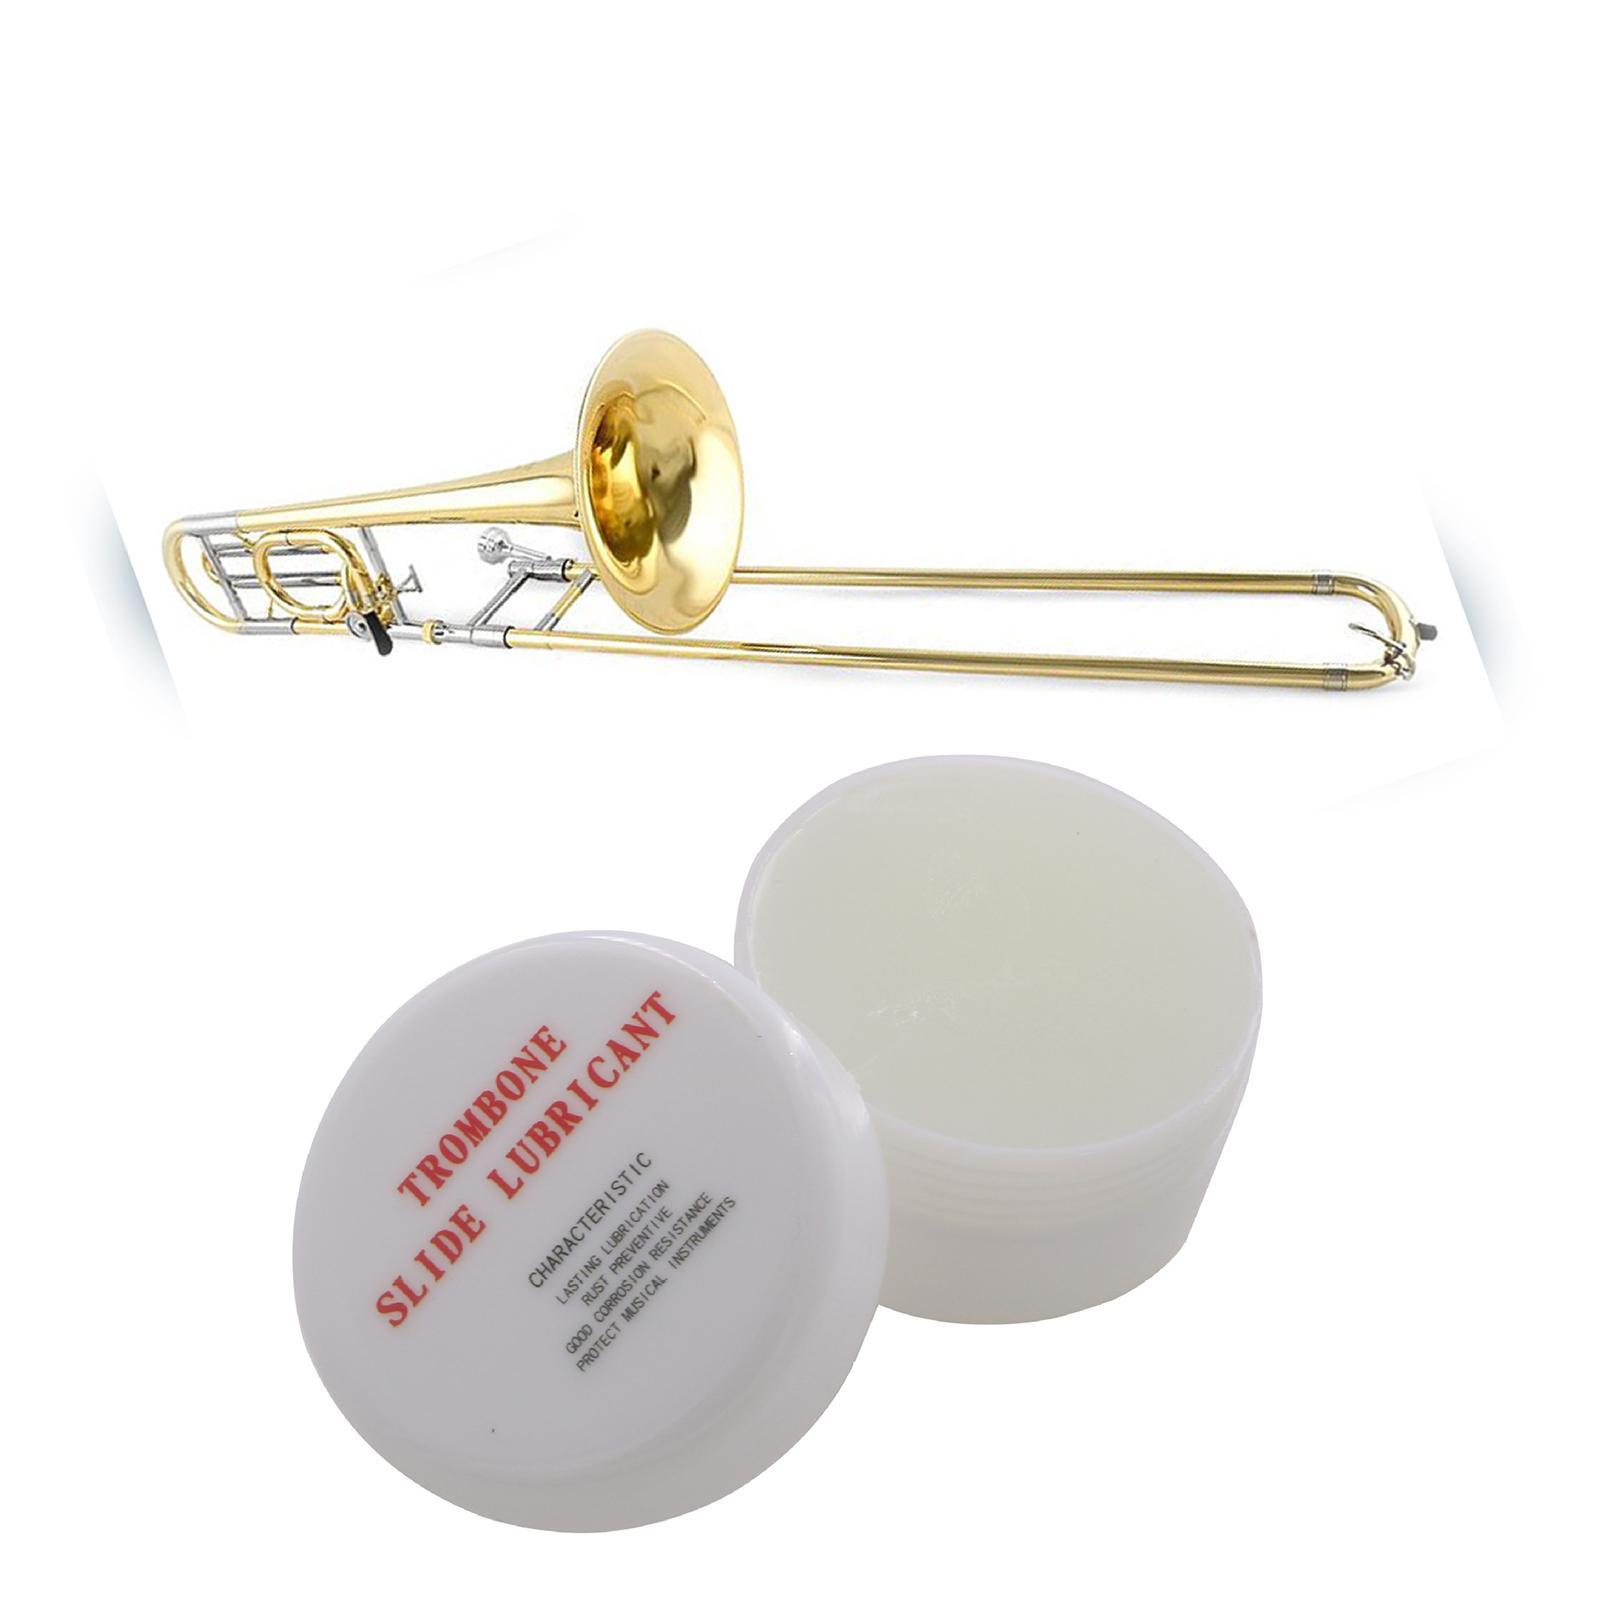 Slide  Premium Tuning Slide  Tube Oil for Trumpet Care Accessories